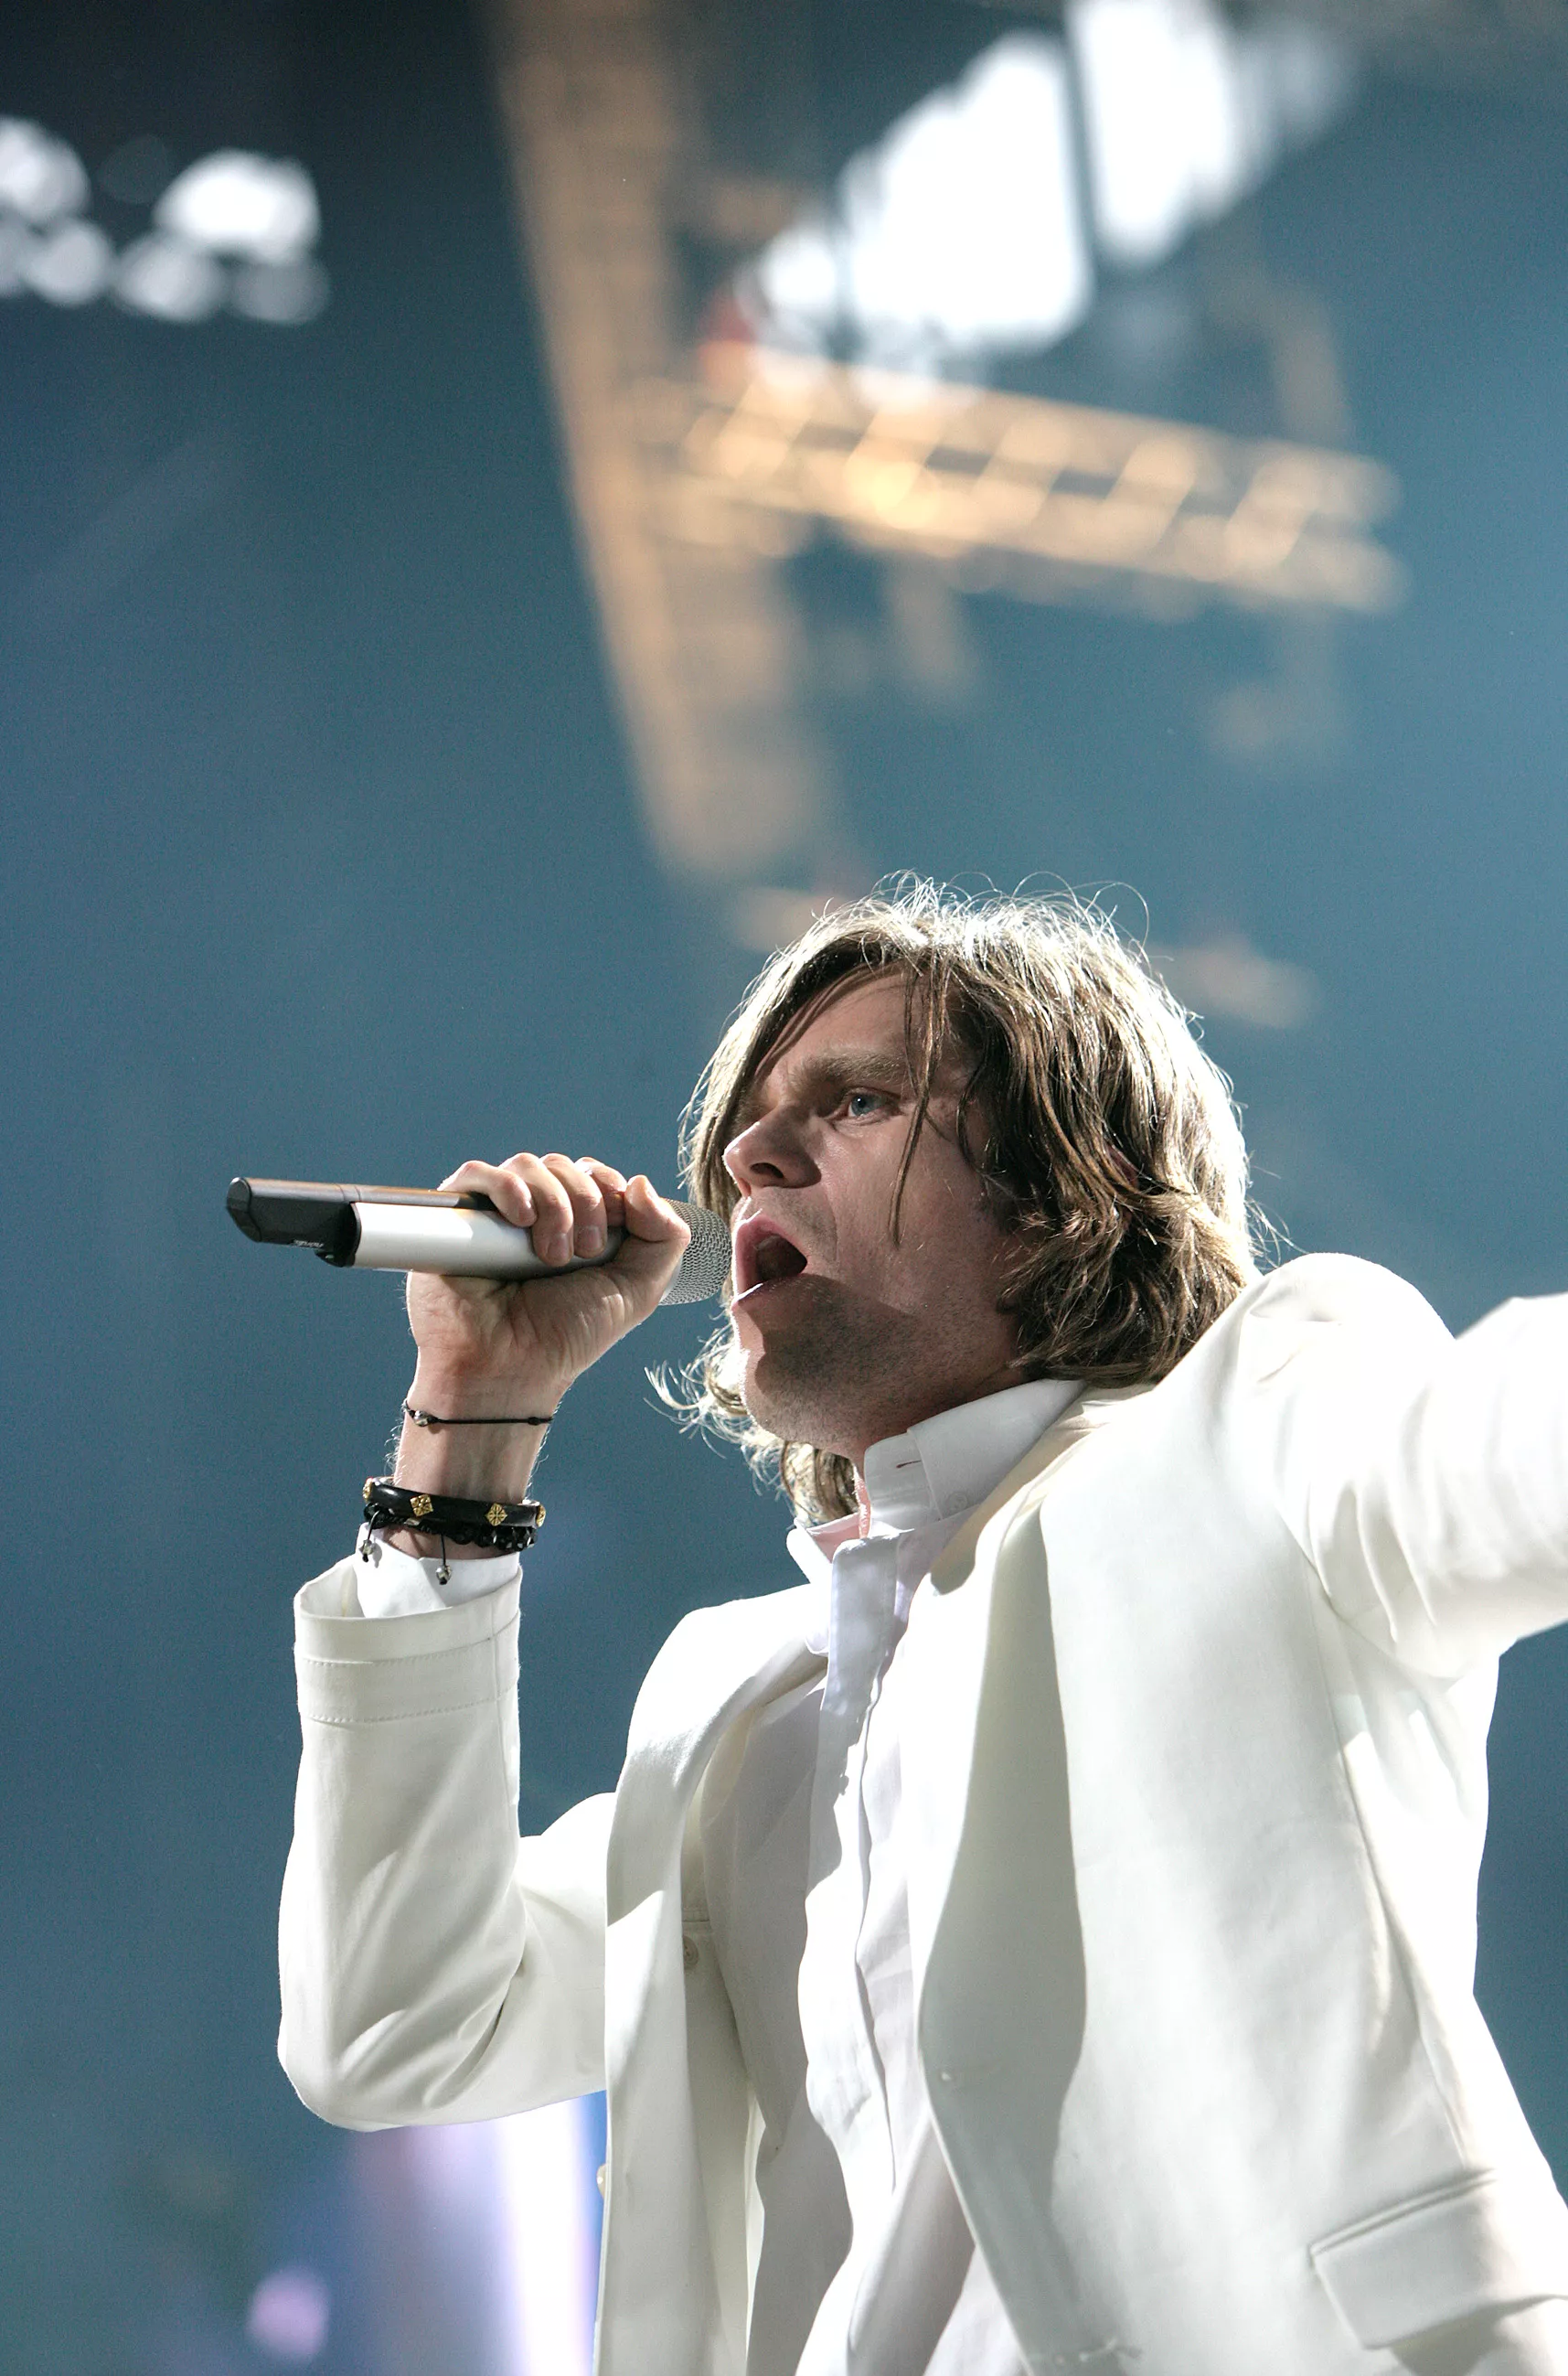 Thomas Ring vandt X Factor i 2010. Foto: DR/Bjarne Bergius Hermansen